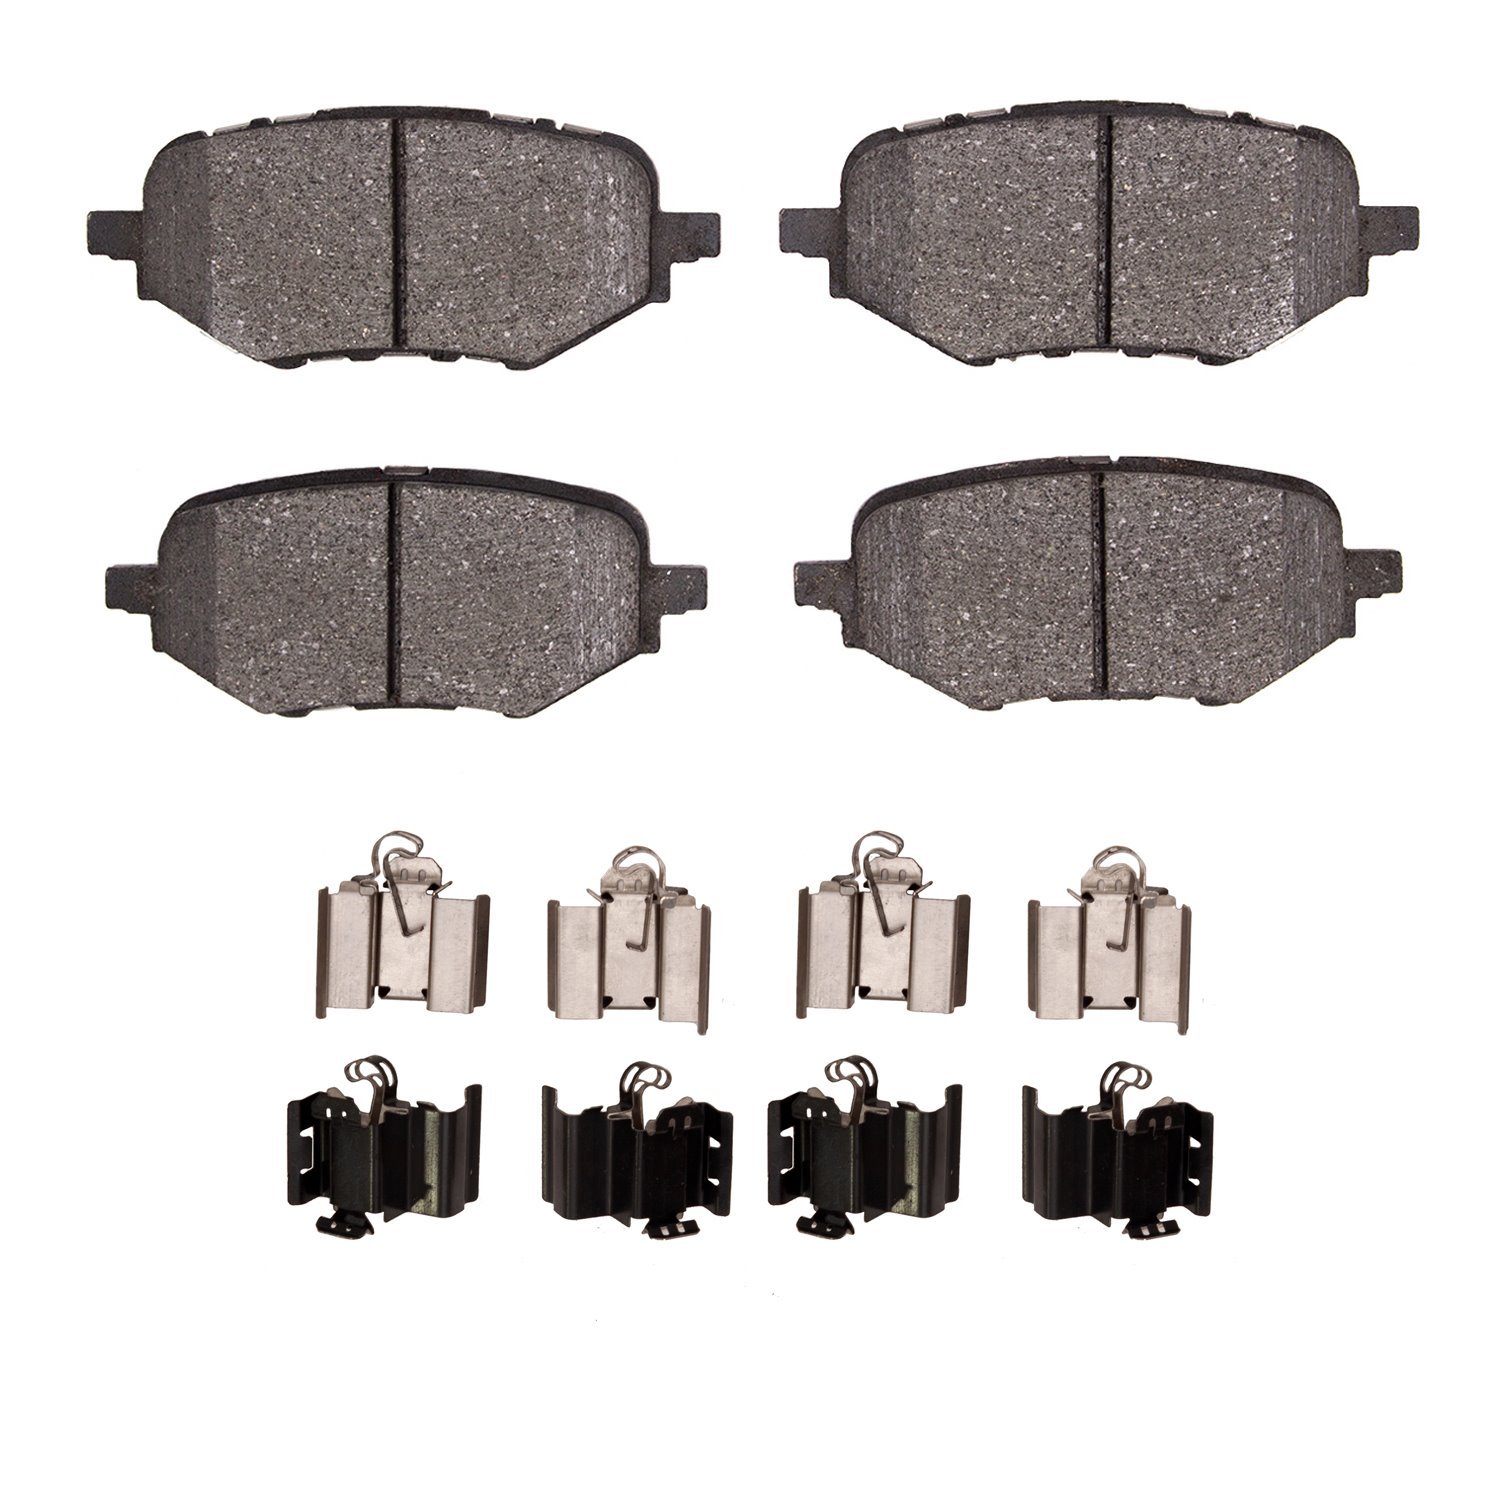 1310-2116-01 3000-Series Ceramic Brake Pads & Hardware Kit, Fits Select Acura/Honda, Position: Rear